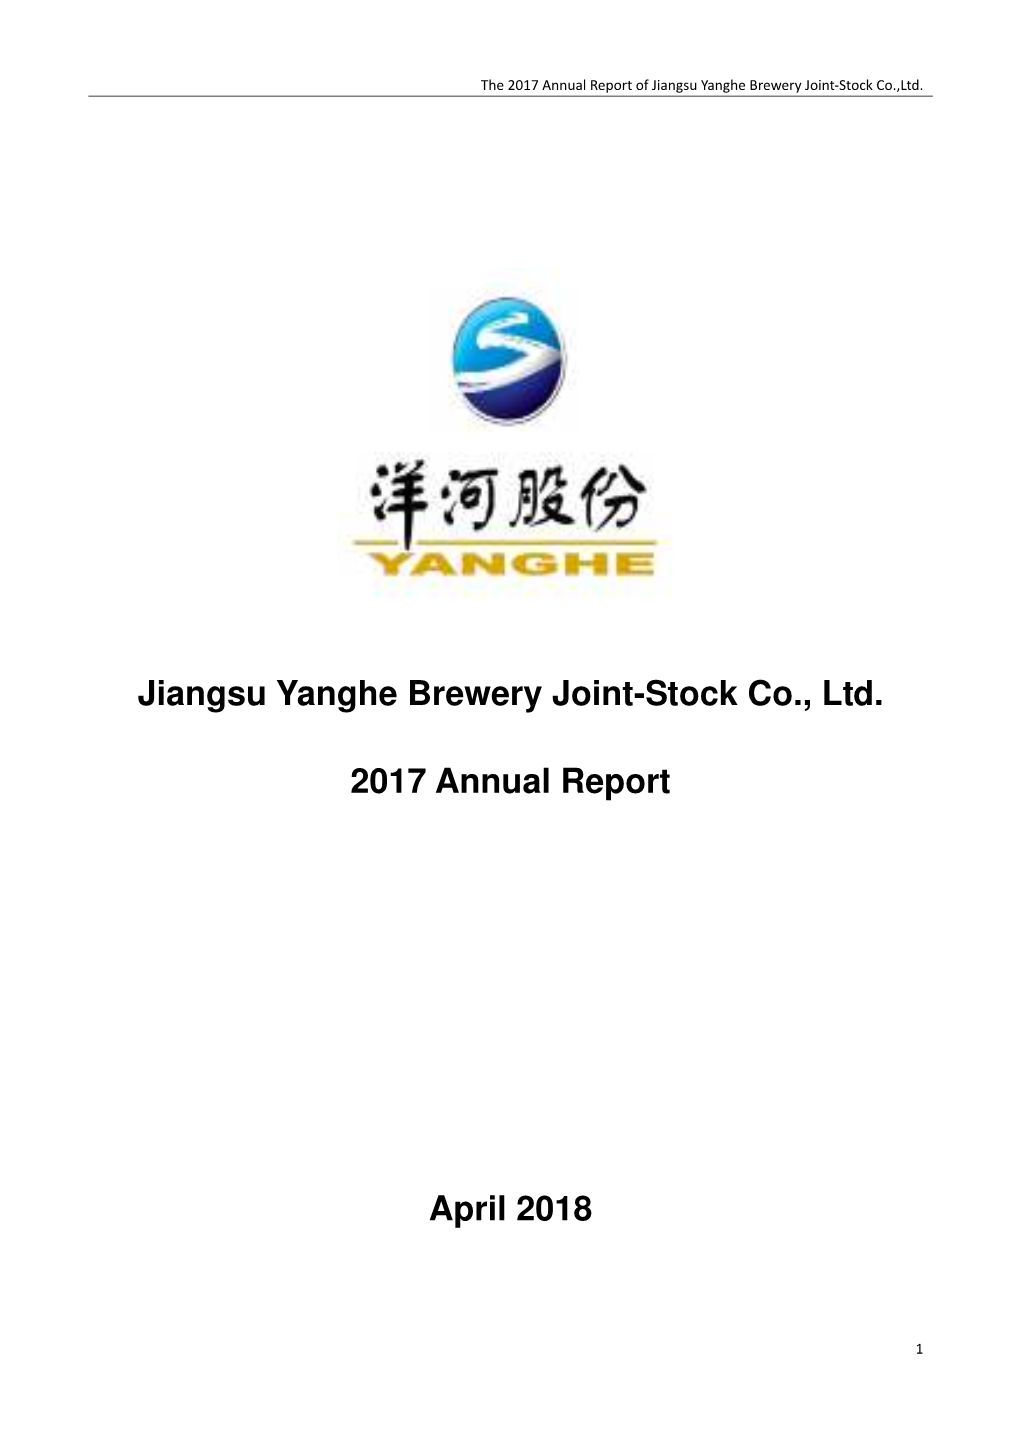 Jiangsu Yanghe Brewery Joint-Stock Co., Ltd. 2017 Annual Report April 2018